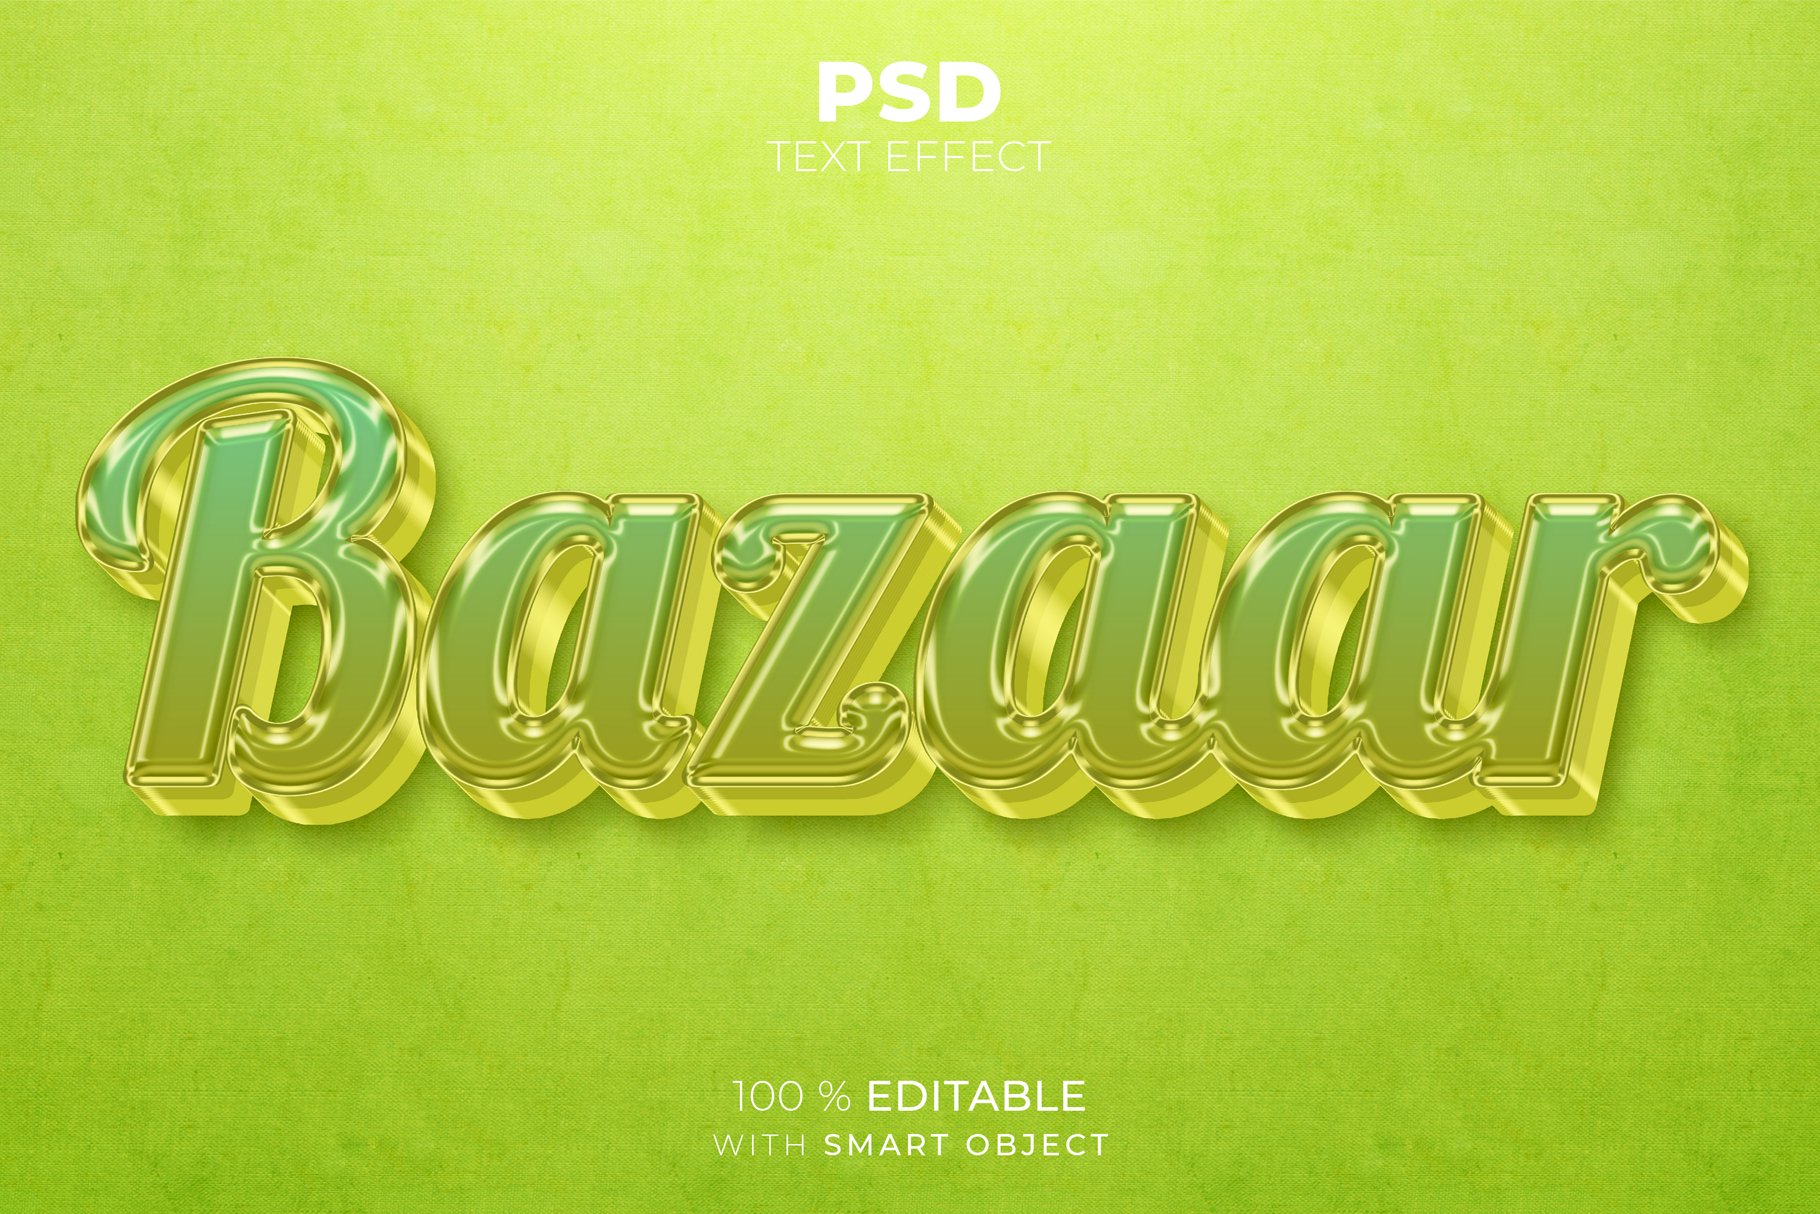 Bazaar 3D editable text effectcover image.